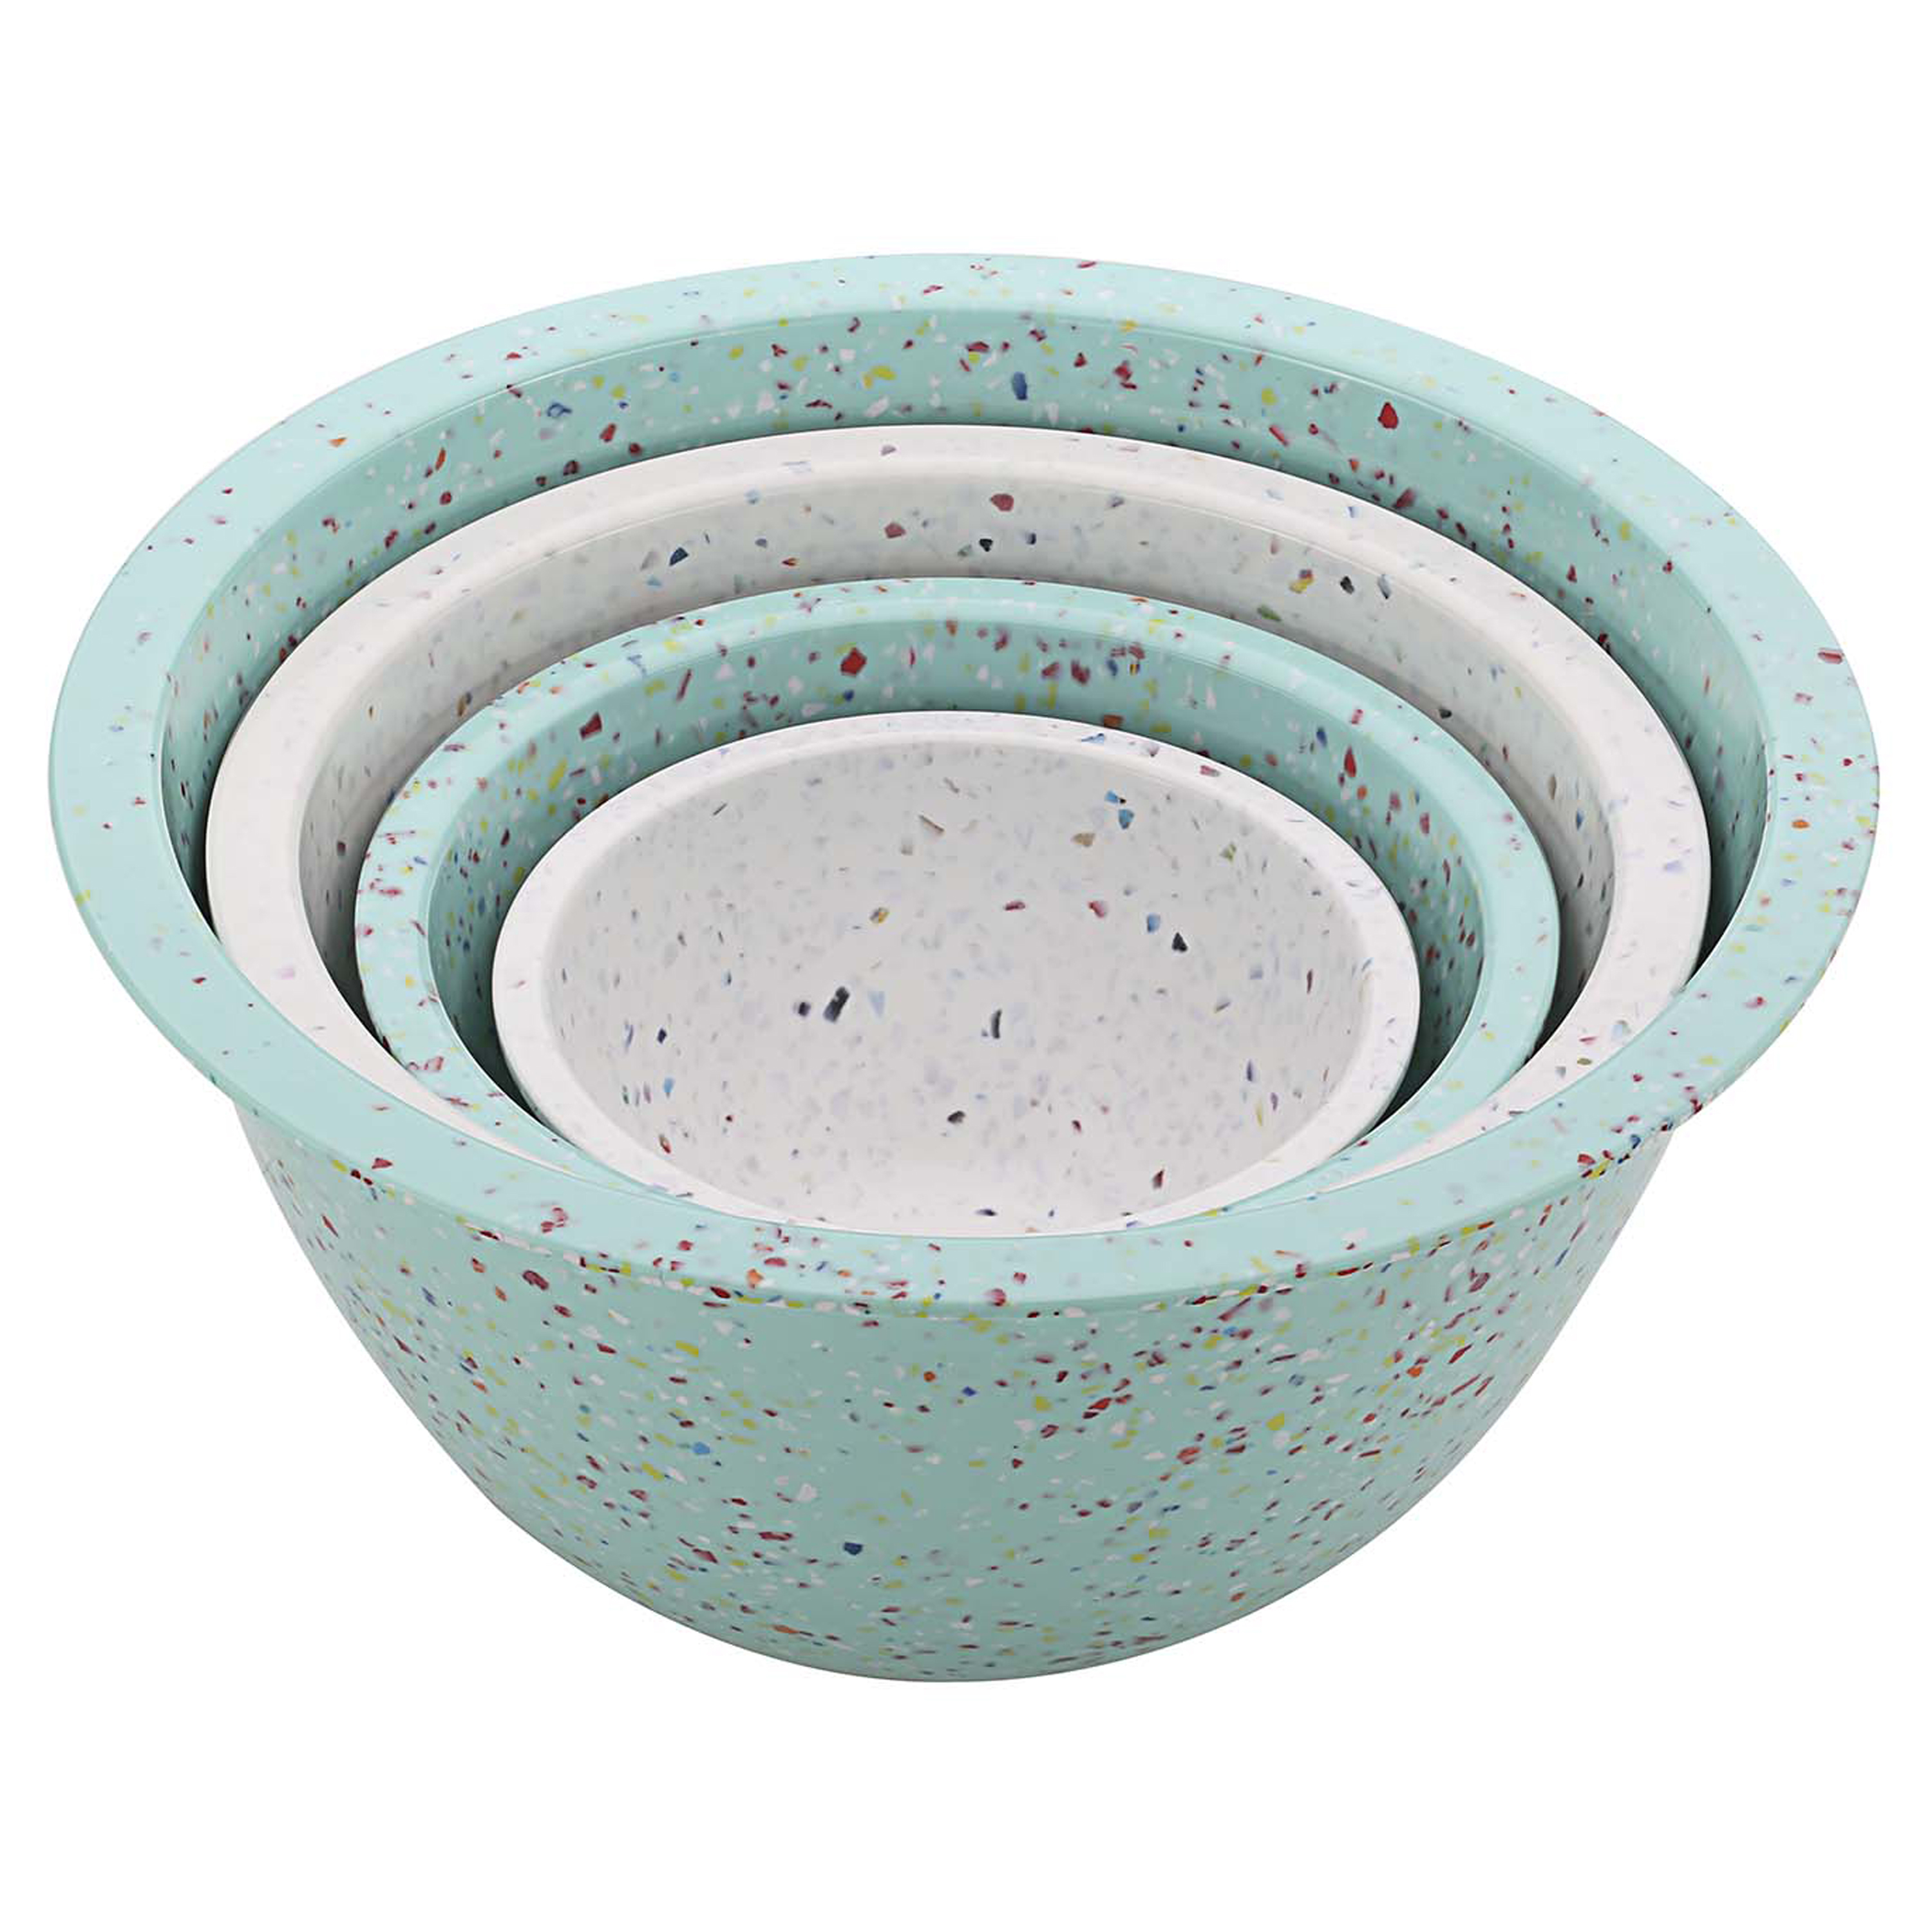 Confetti Mixing Bowl Set, Mint & White, 4-piece set slideshow image 2